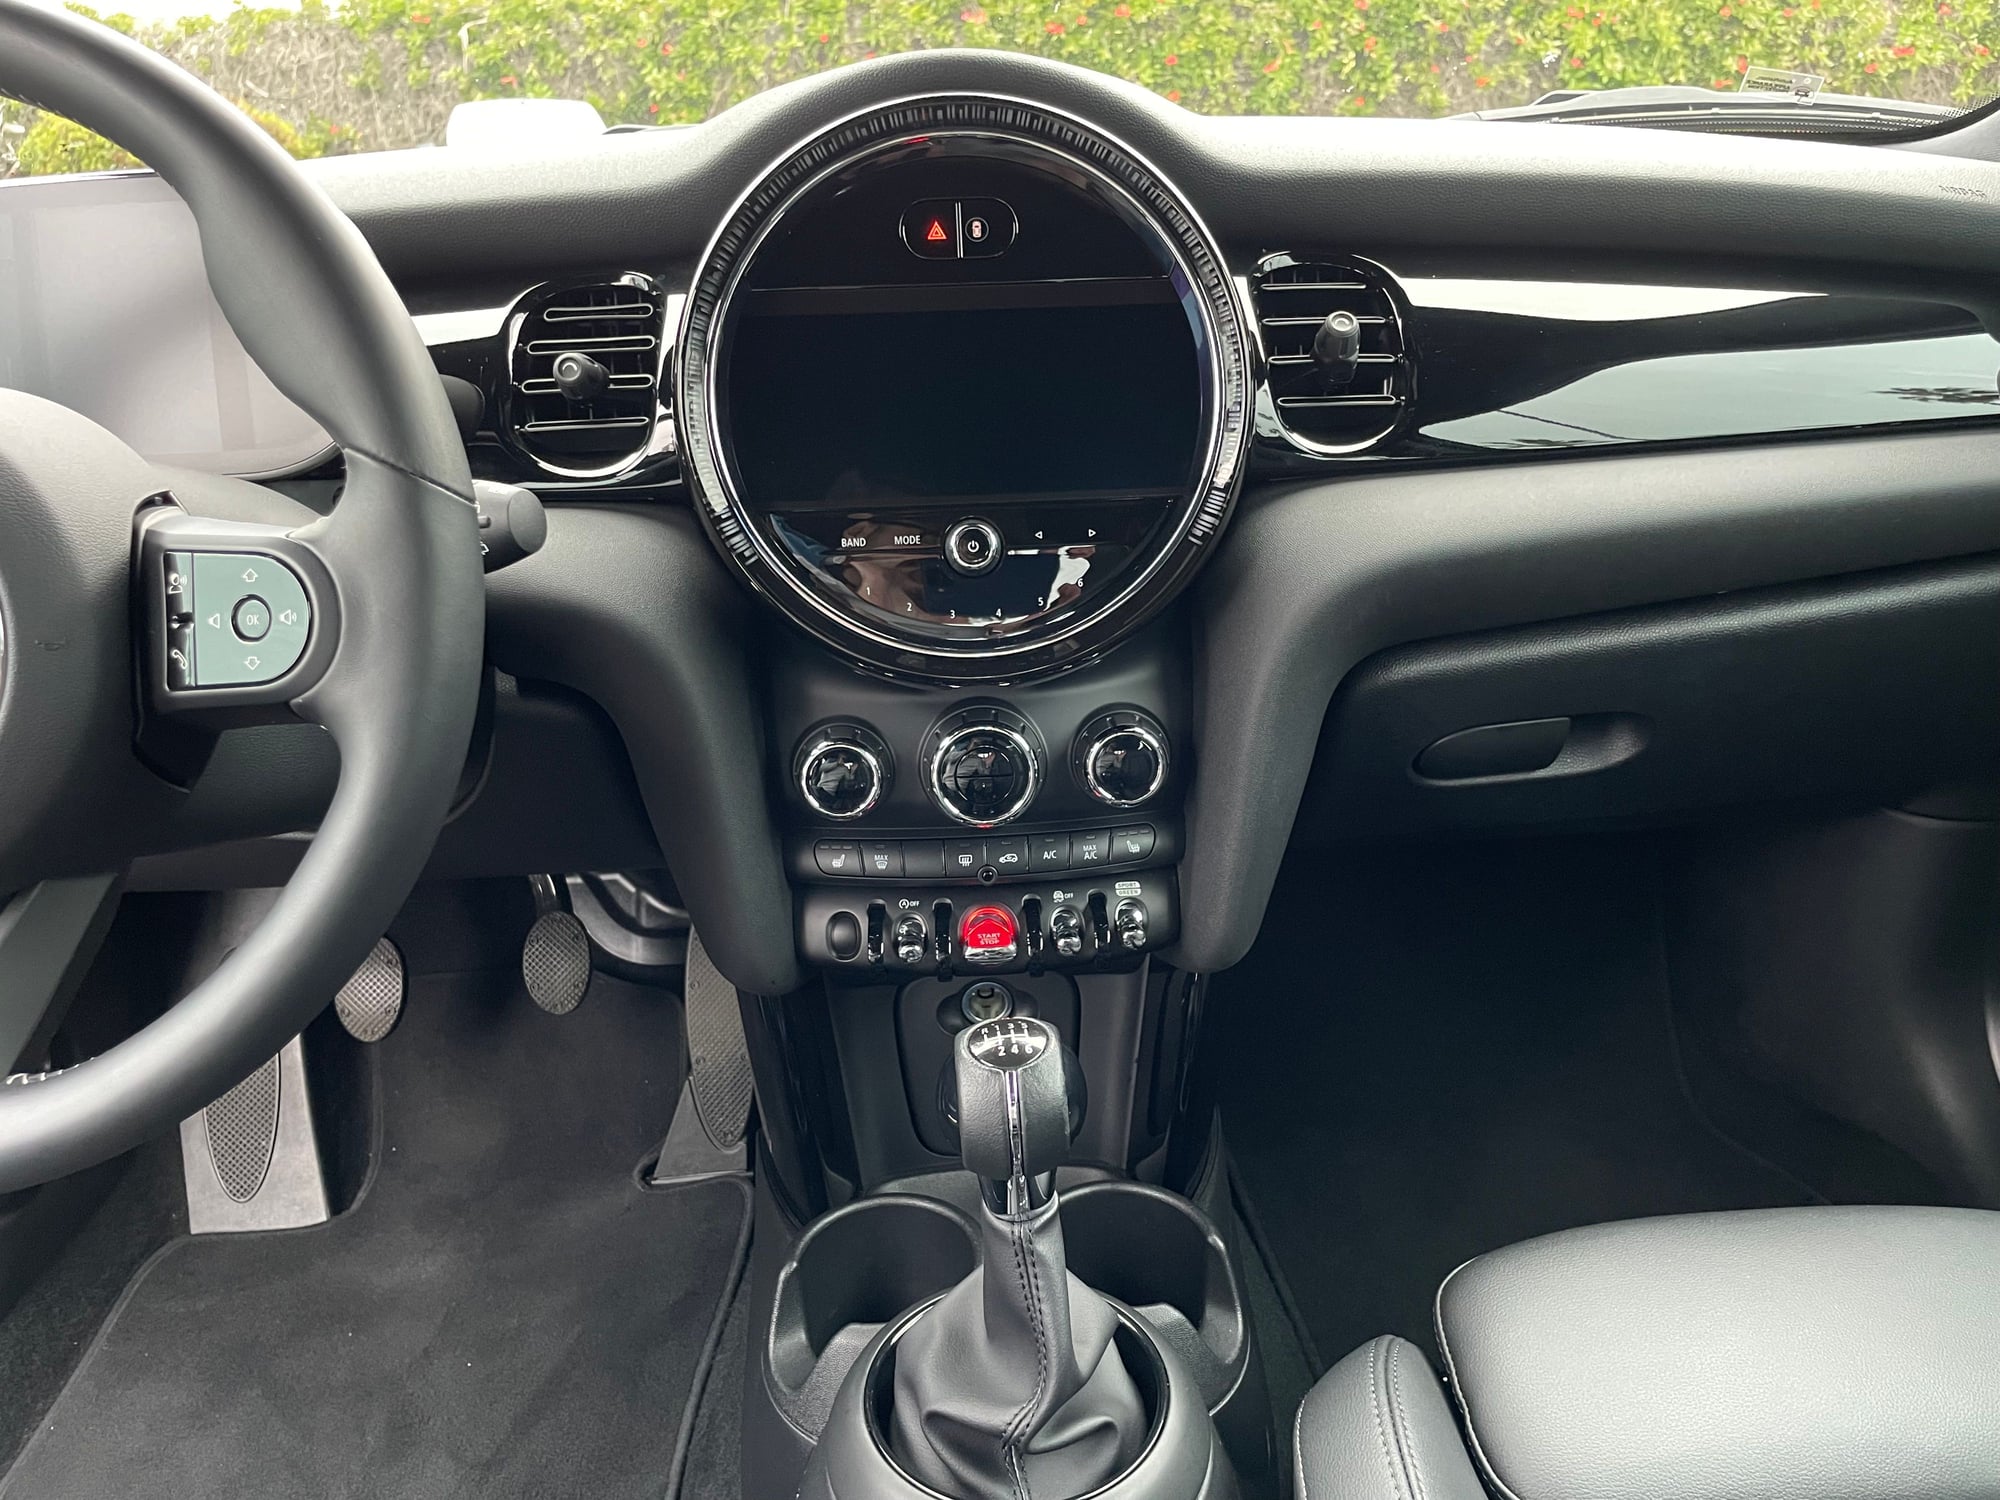 2022 Mini F56: Mini Hatch/Hardtop - 2022 Mini Cooper S manual transmission - Used - Ventura, CA 93003, United States